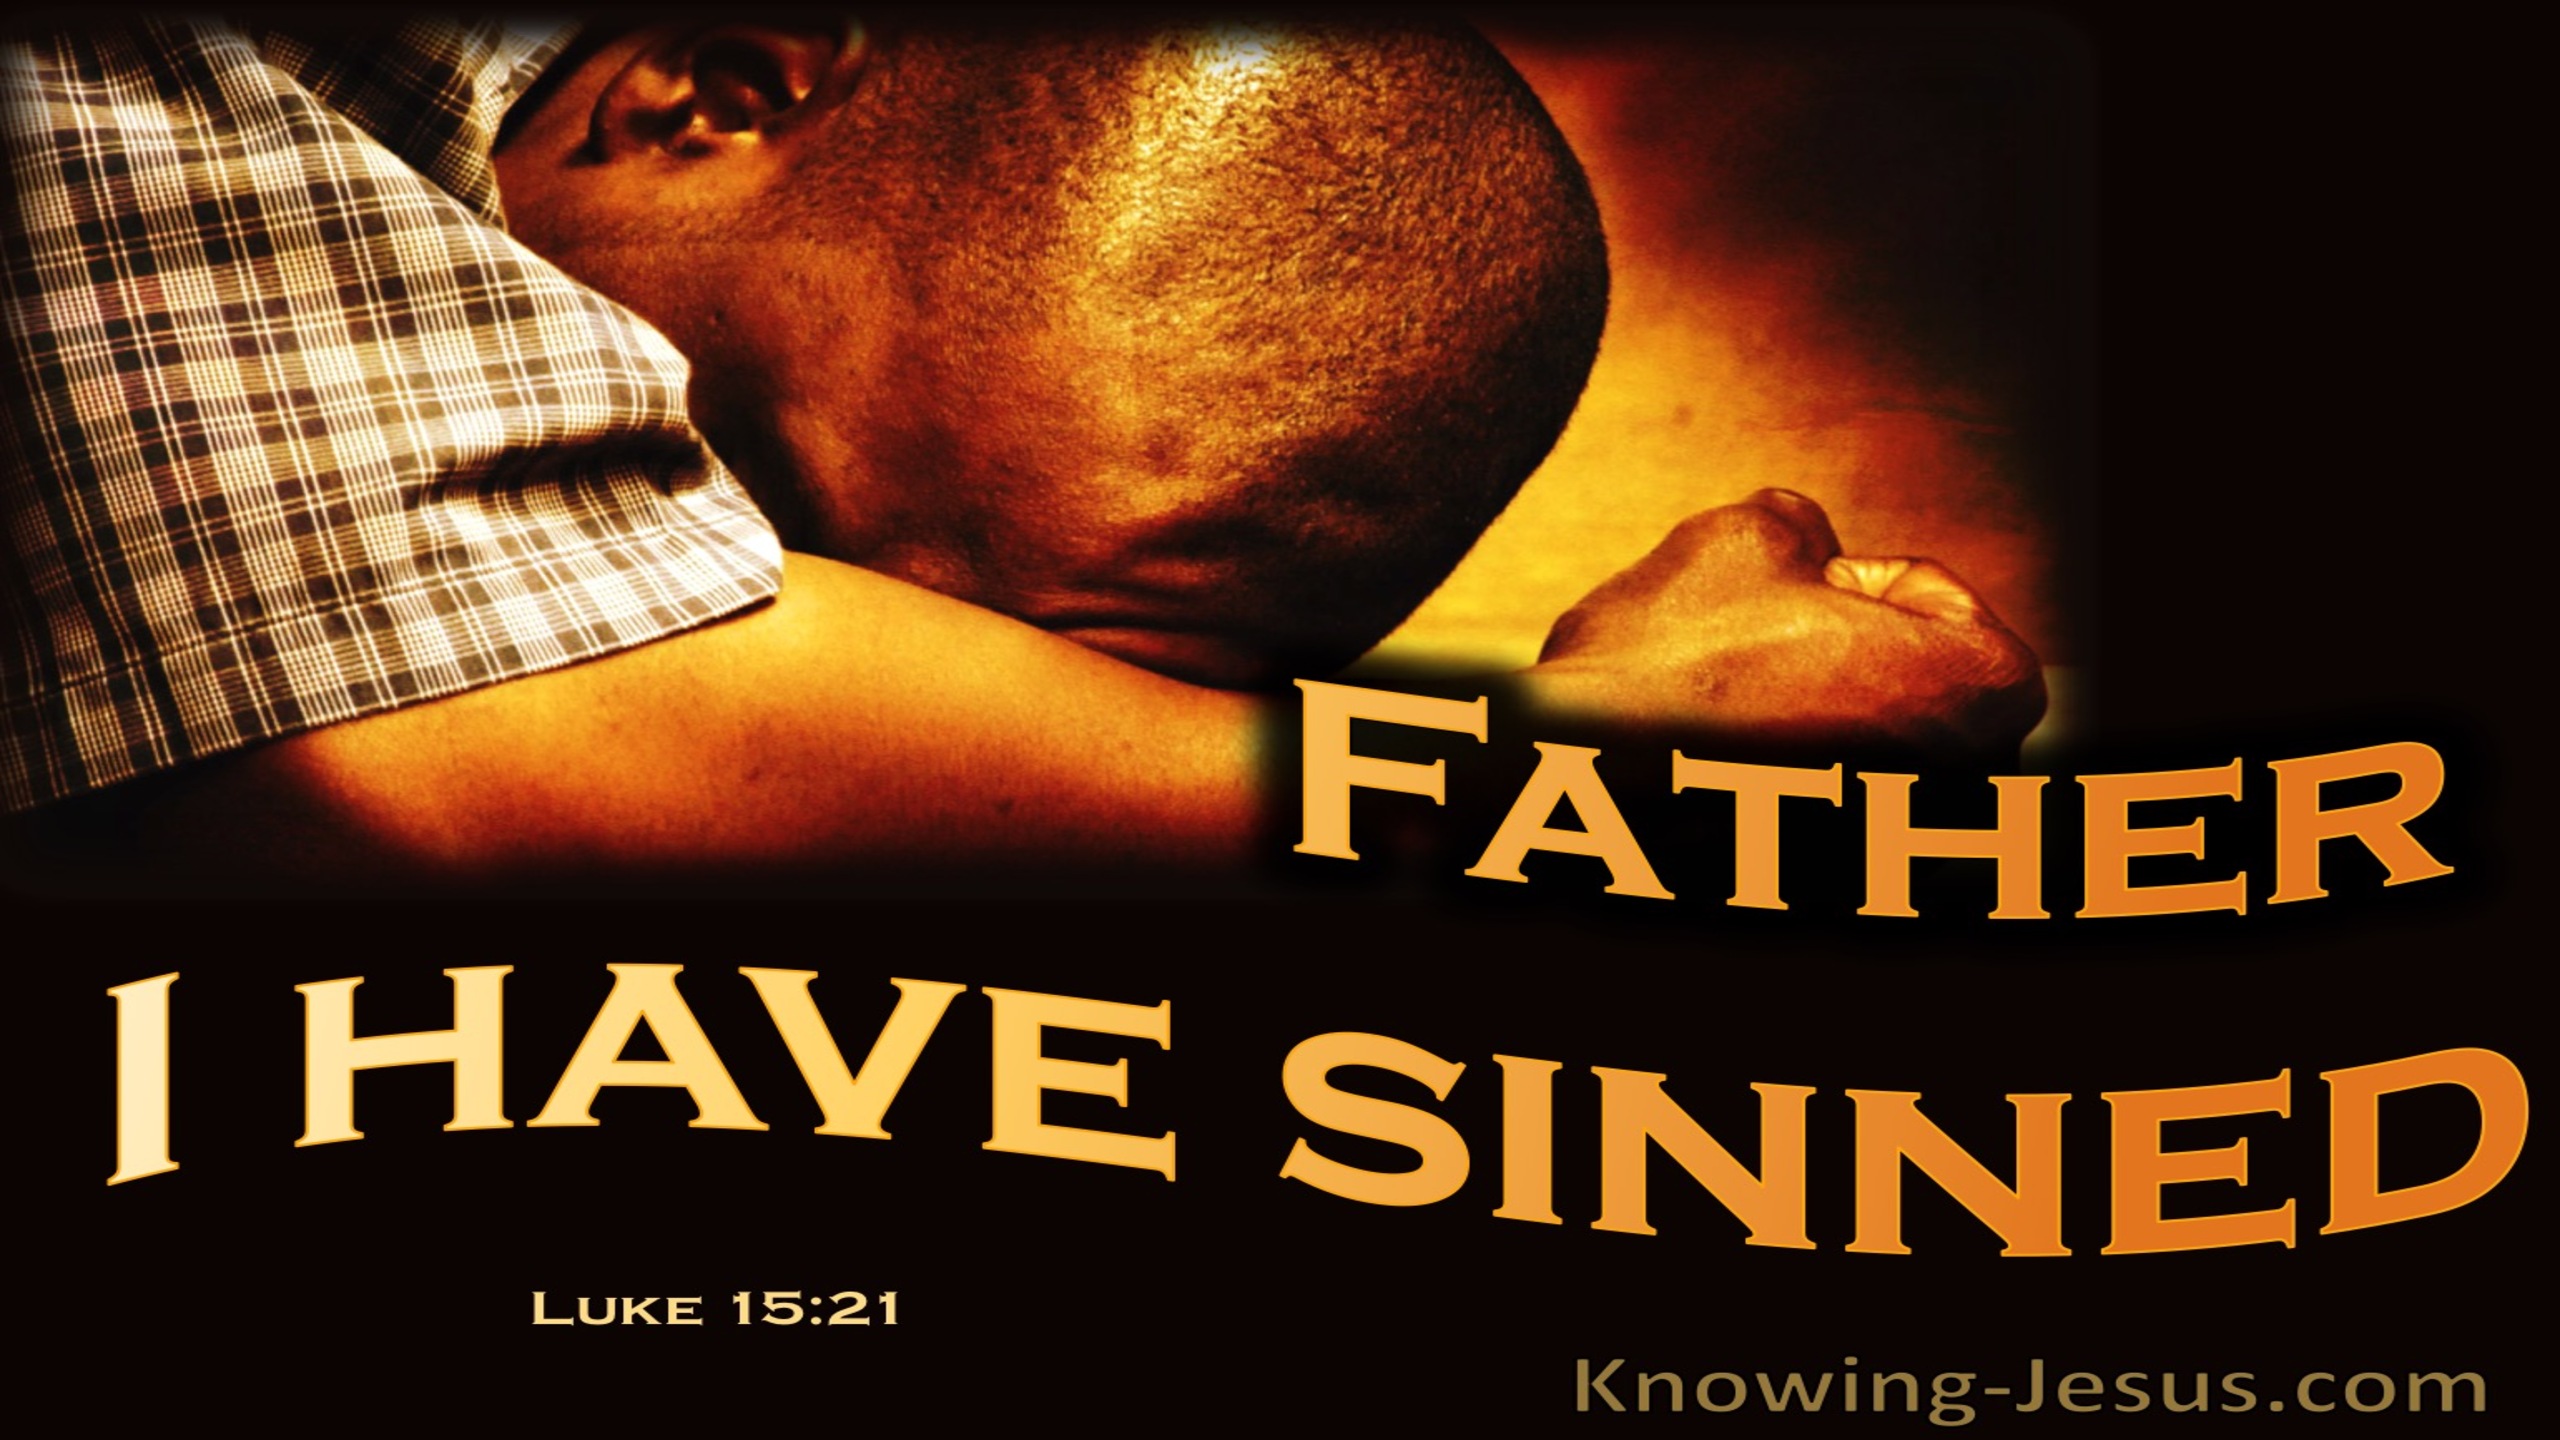 Luke 15:21The Prodigal Son Sinned (orange)